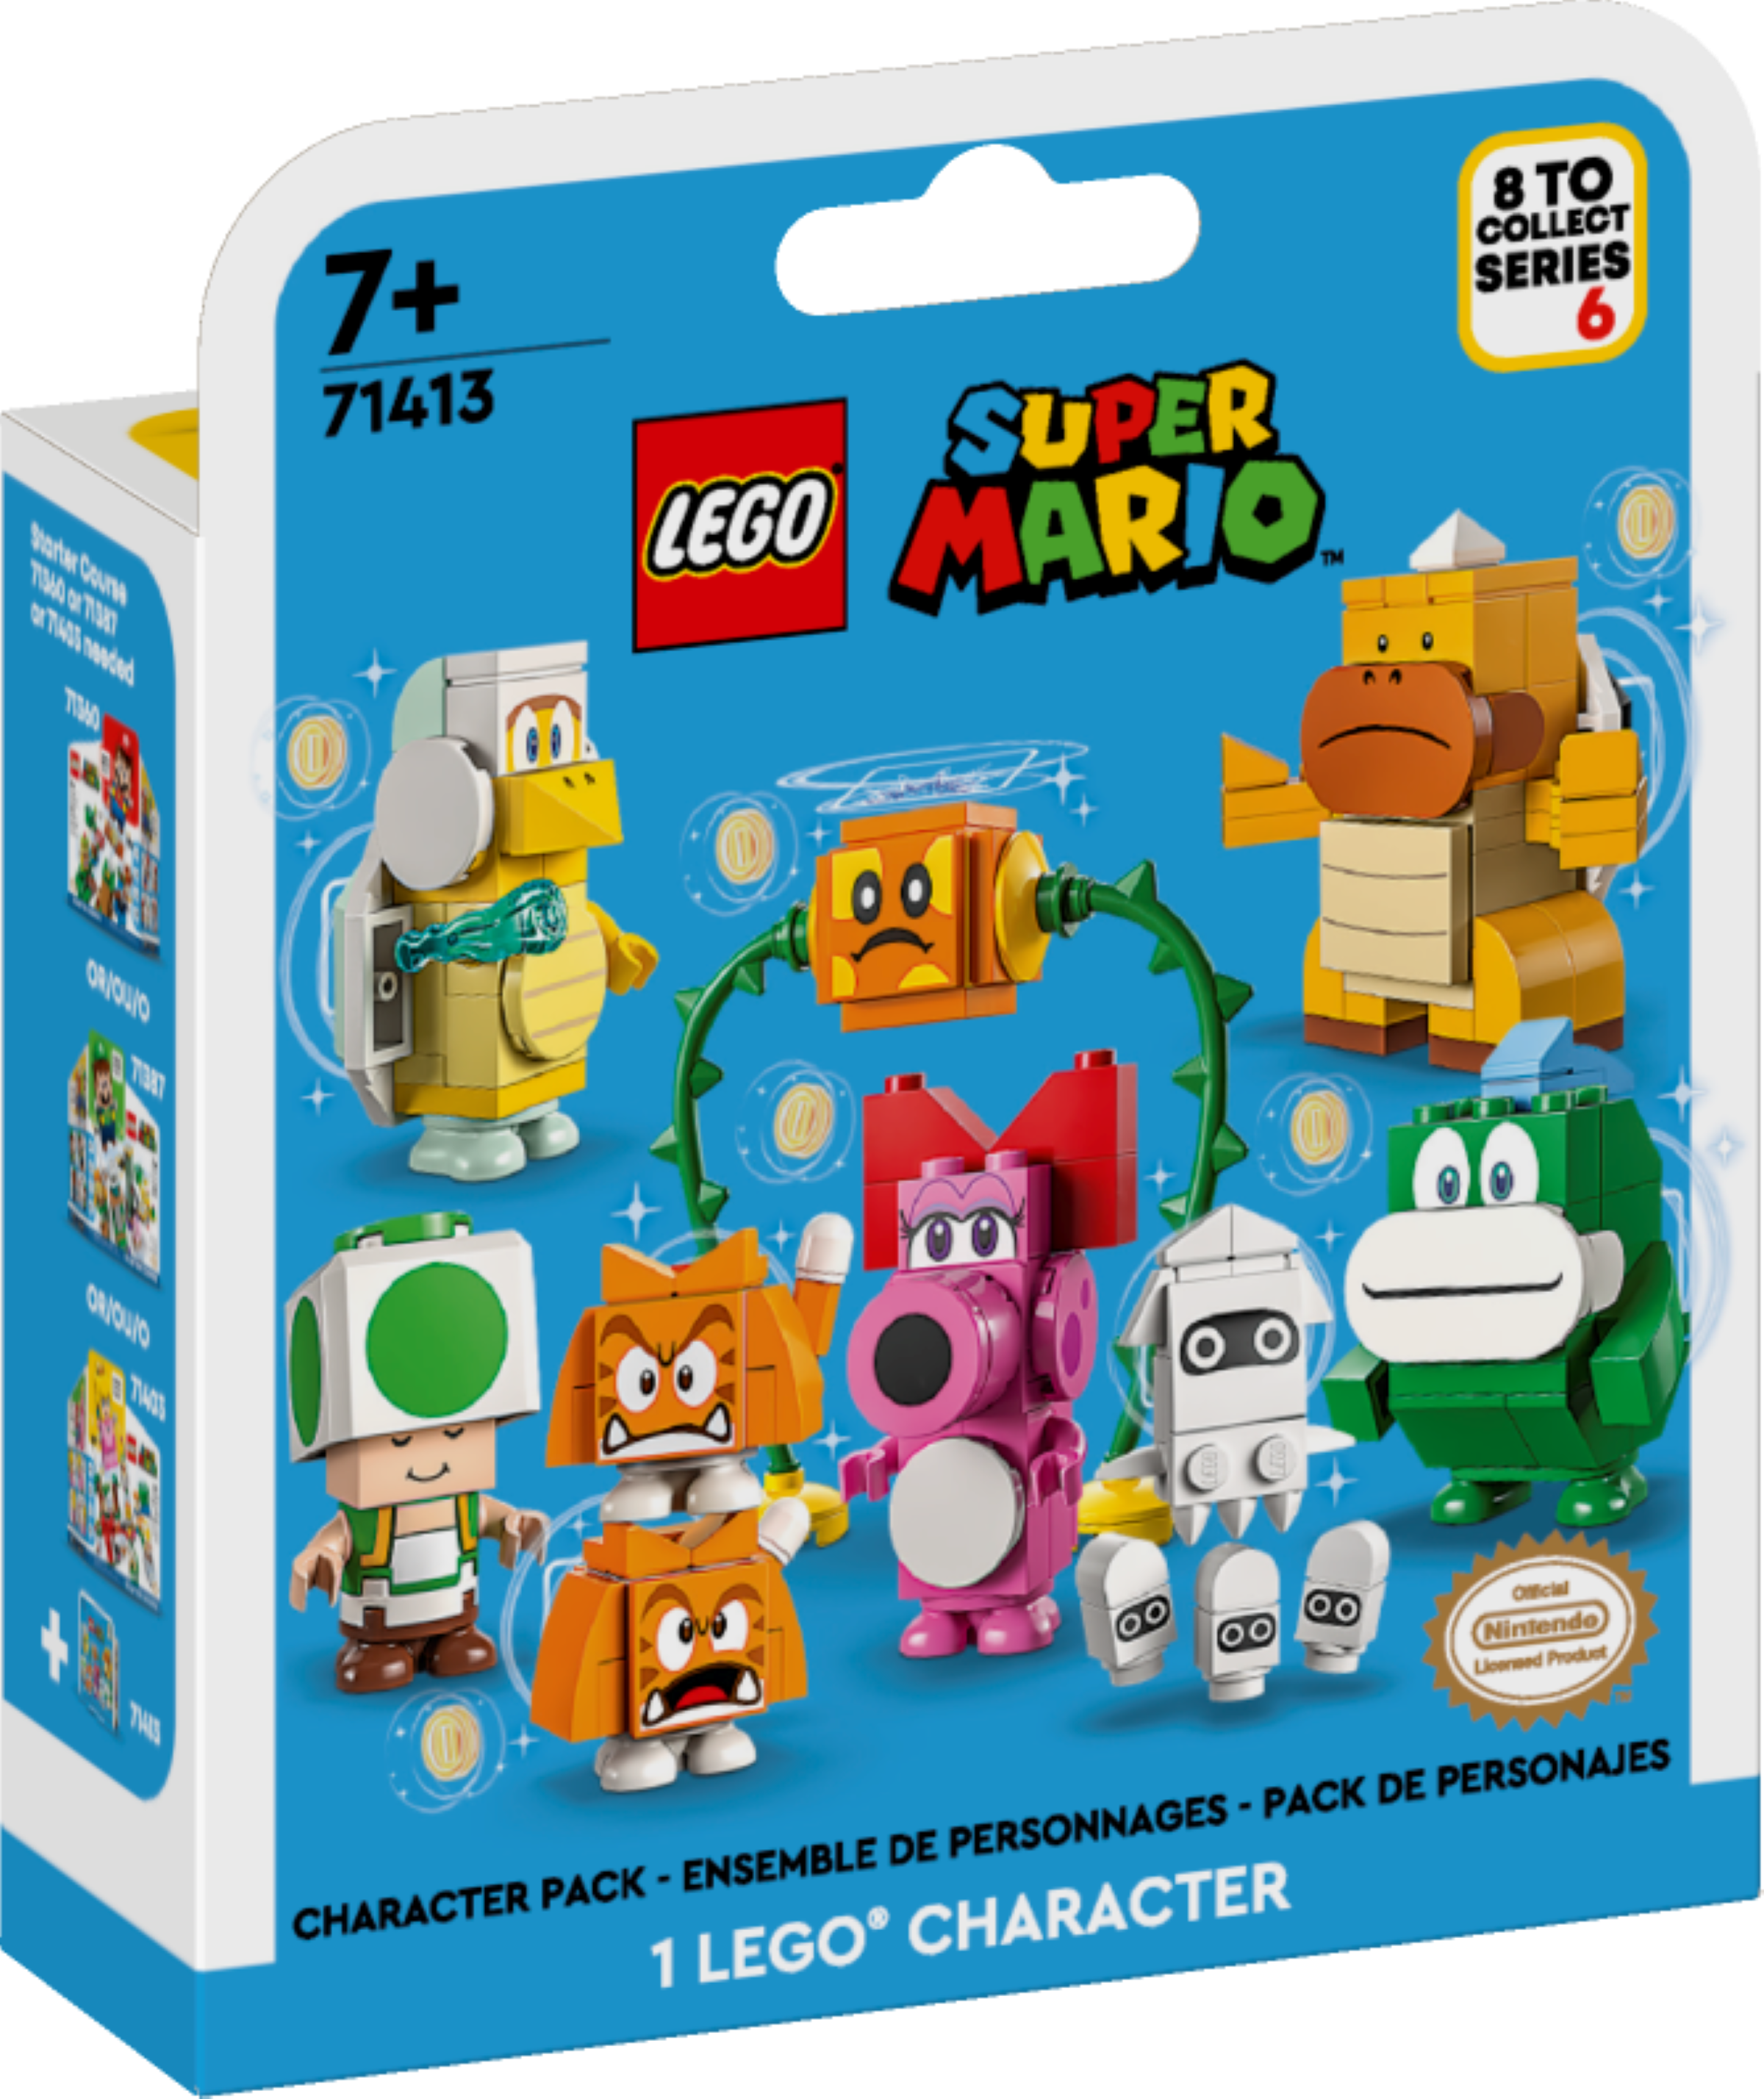 NEW LEGO Super Mario MARIO KART EXPANSION PACK SET